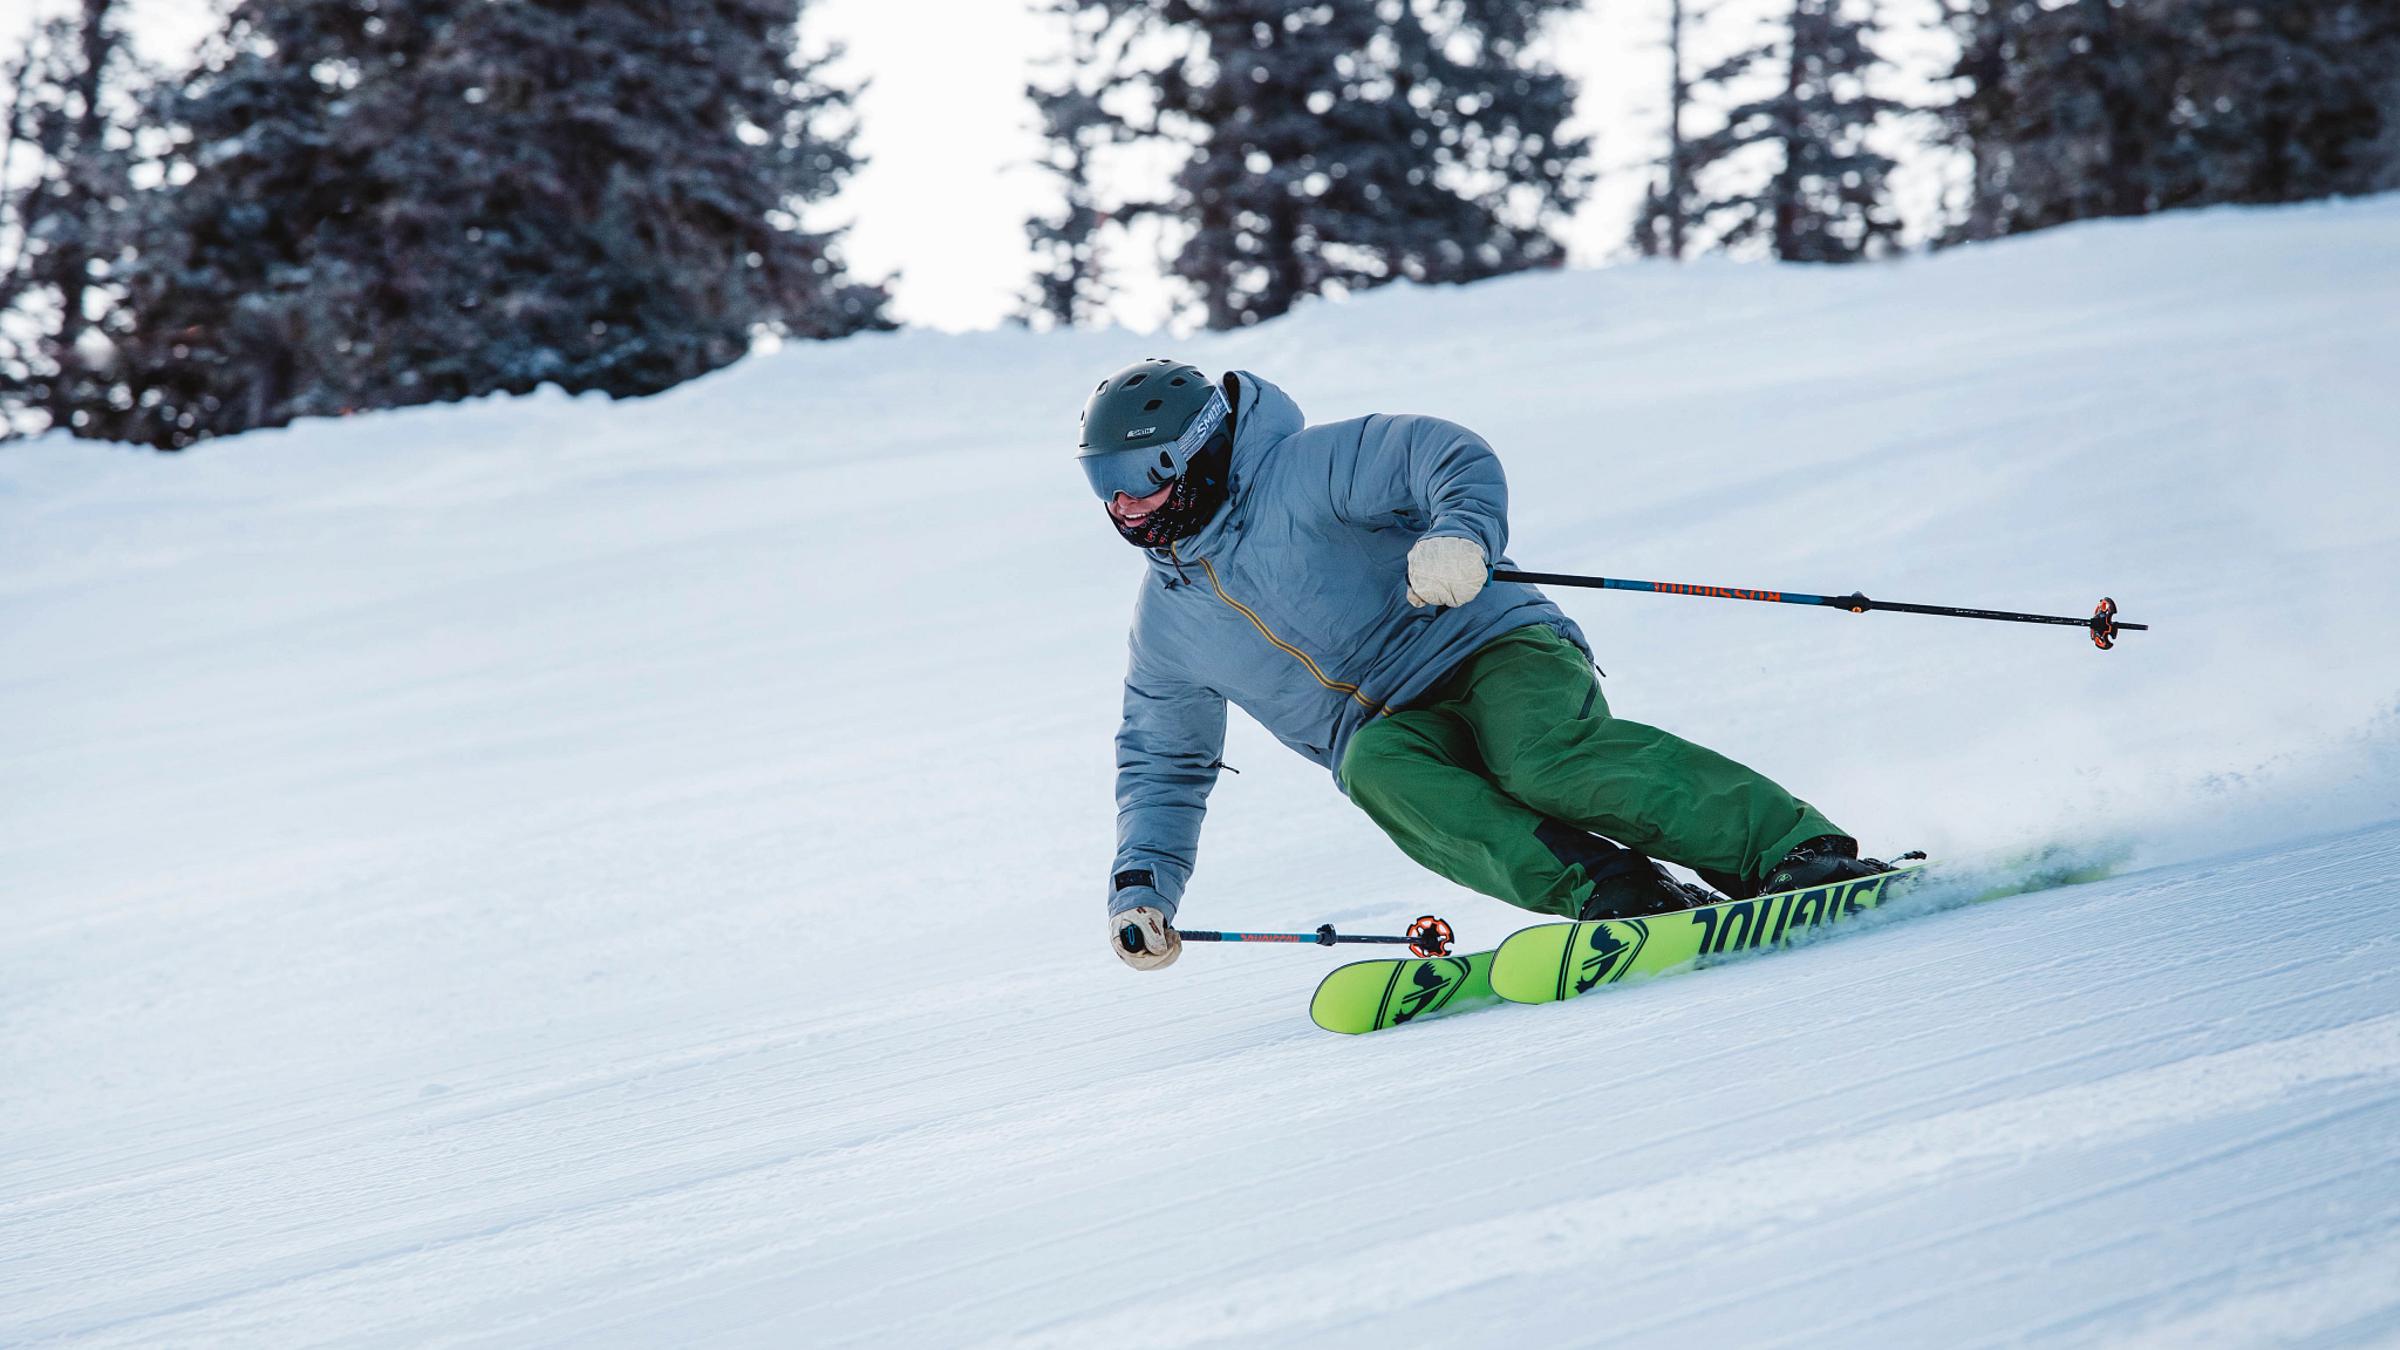 Performance ski rentals at Deer Valley Resort